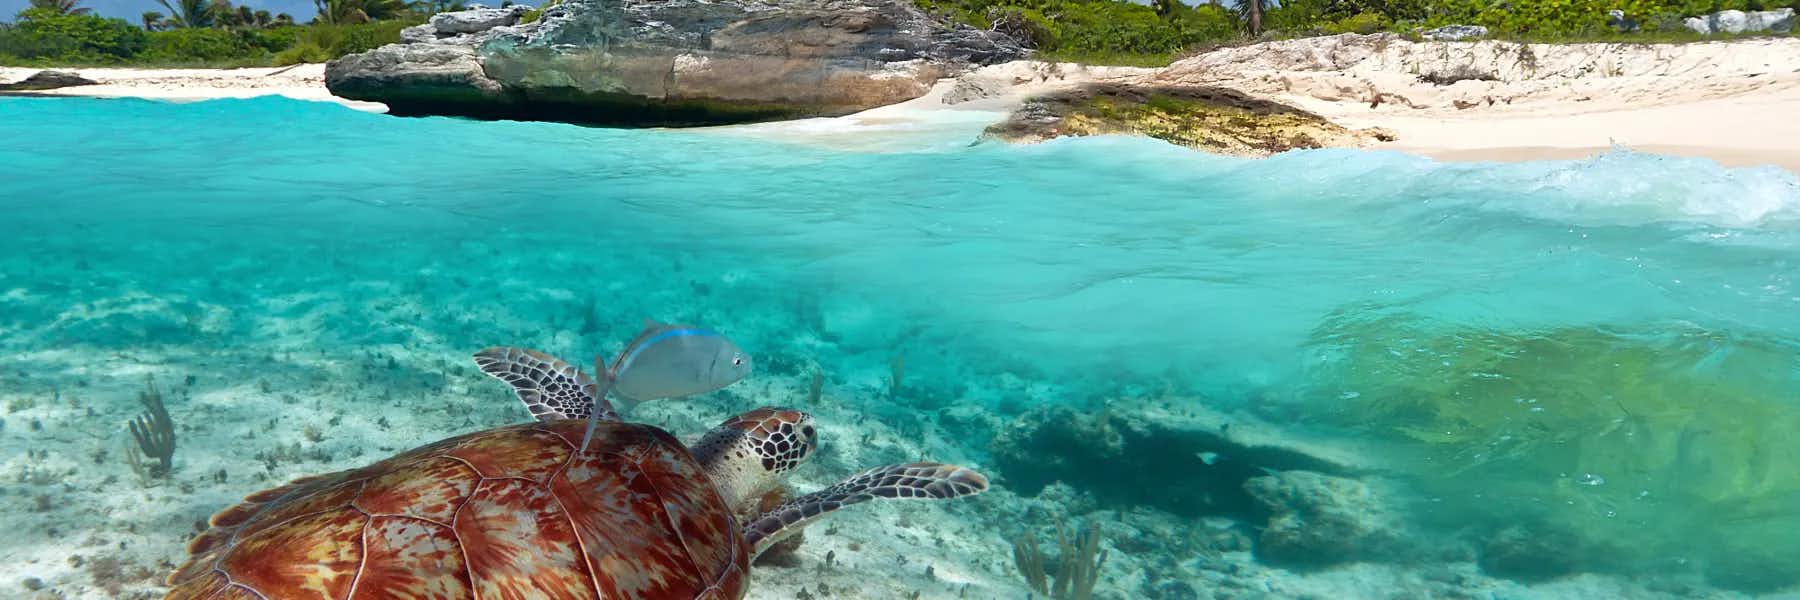 12 Best Destinations to Retire on Mexico’s Caribbean Coast